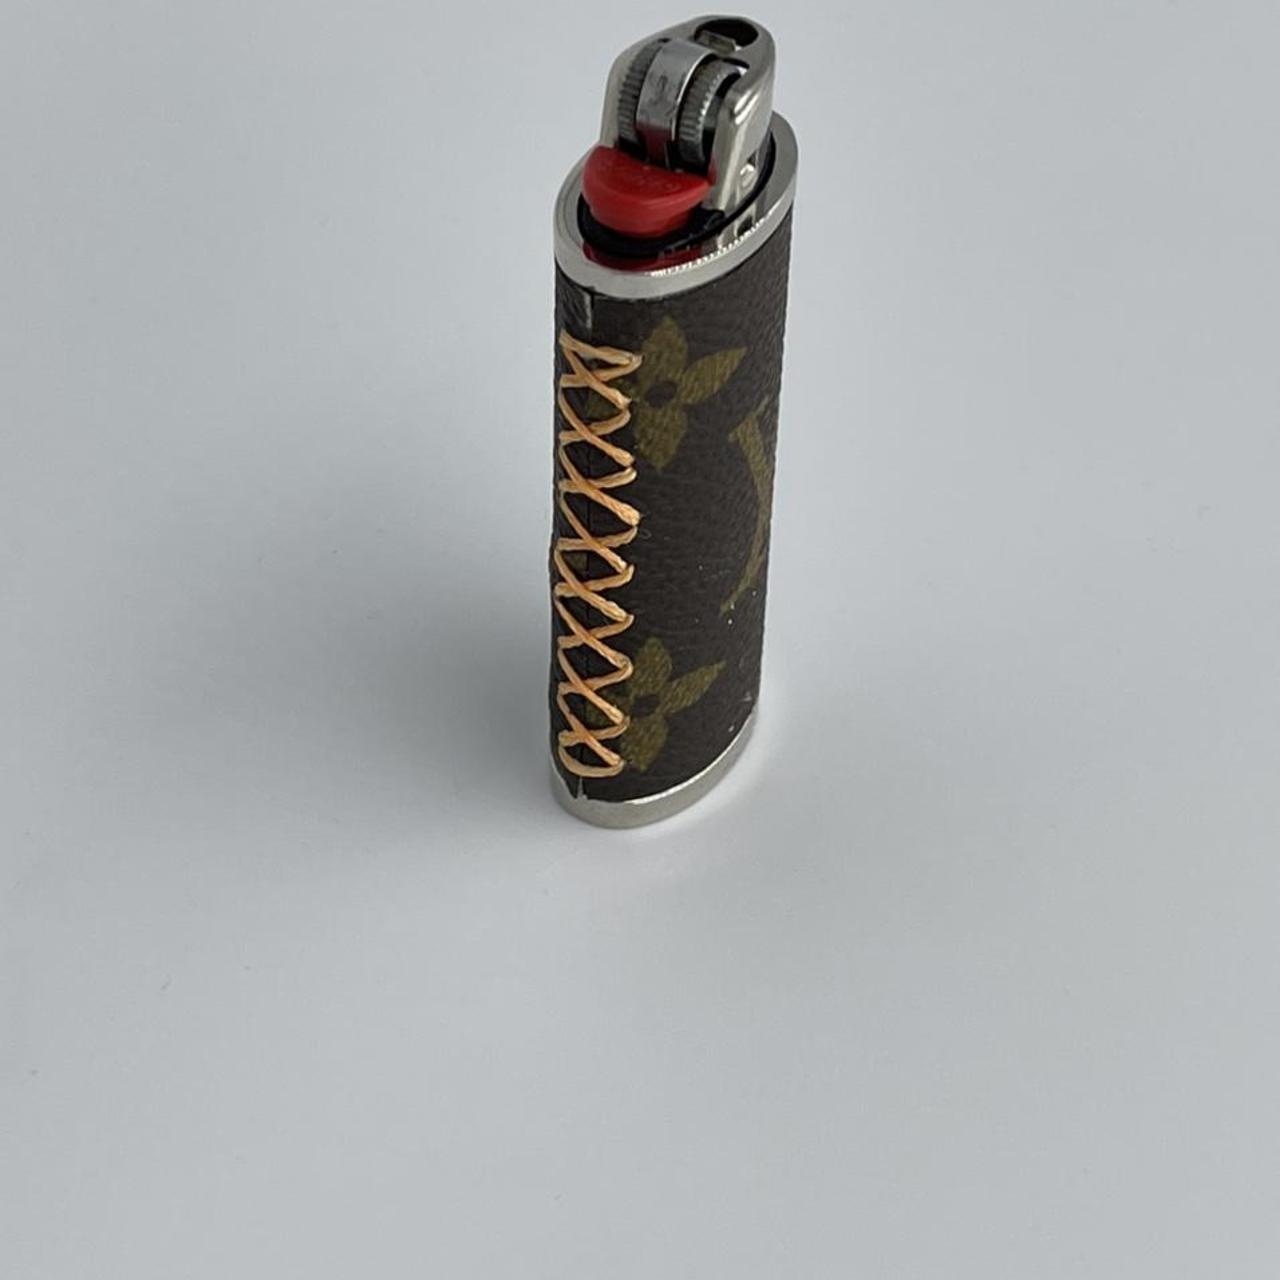 Real Louis Vuitton Lighter Case #LV #Lighters #Bic #BicLighter